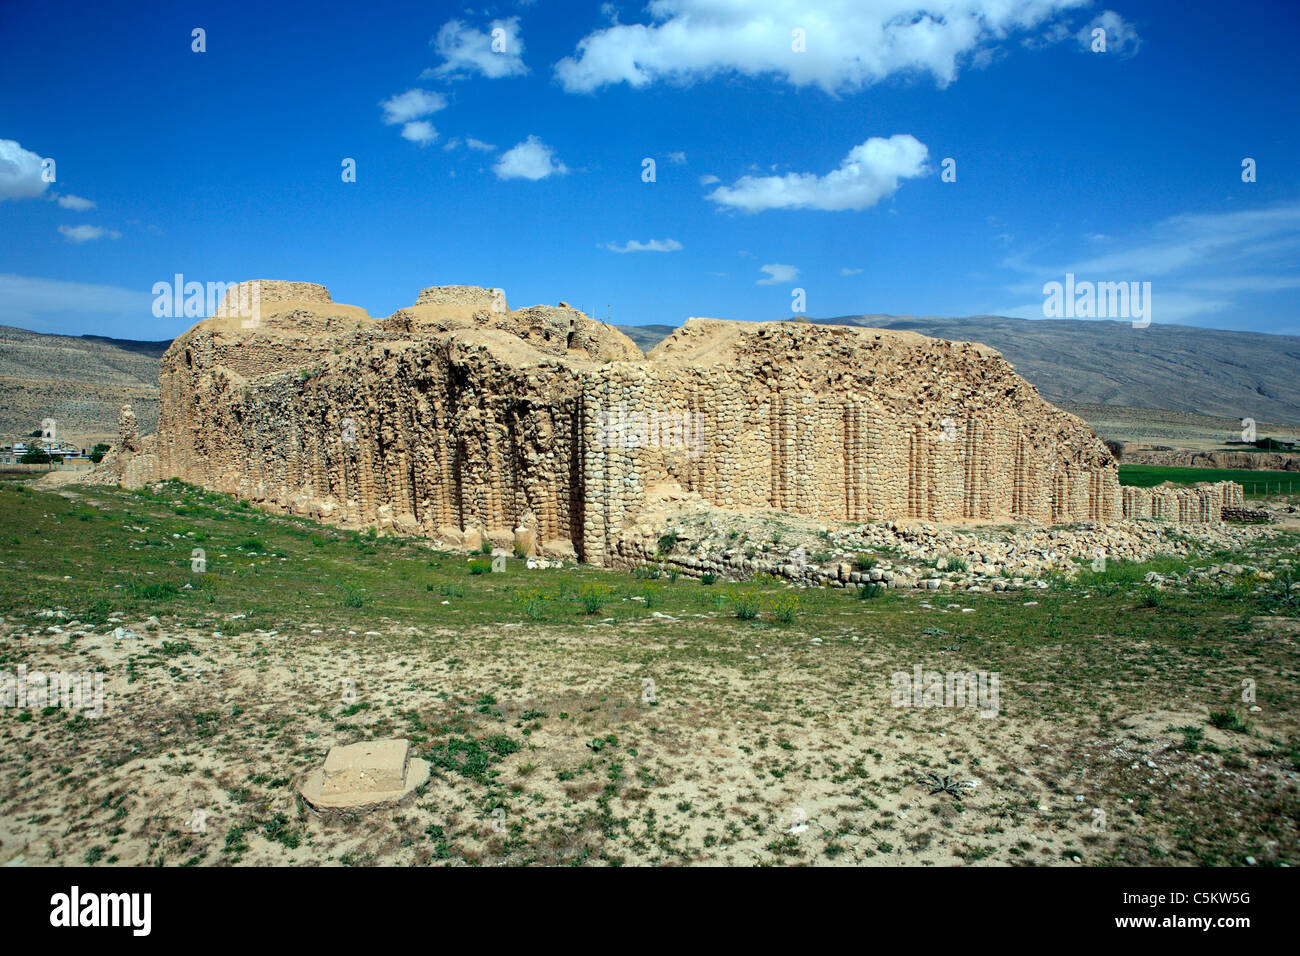 Palais du roi sassanide Ardashir I (230), près de Firouzabad (Firuzabad), la province du Fars, Iran Banque D'Images